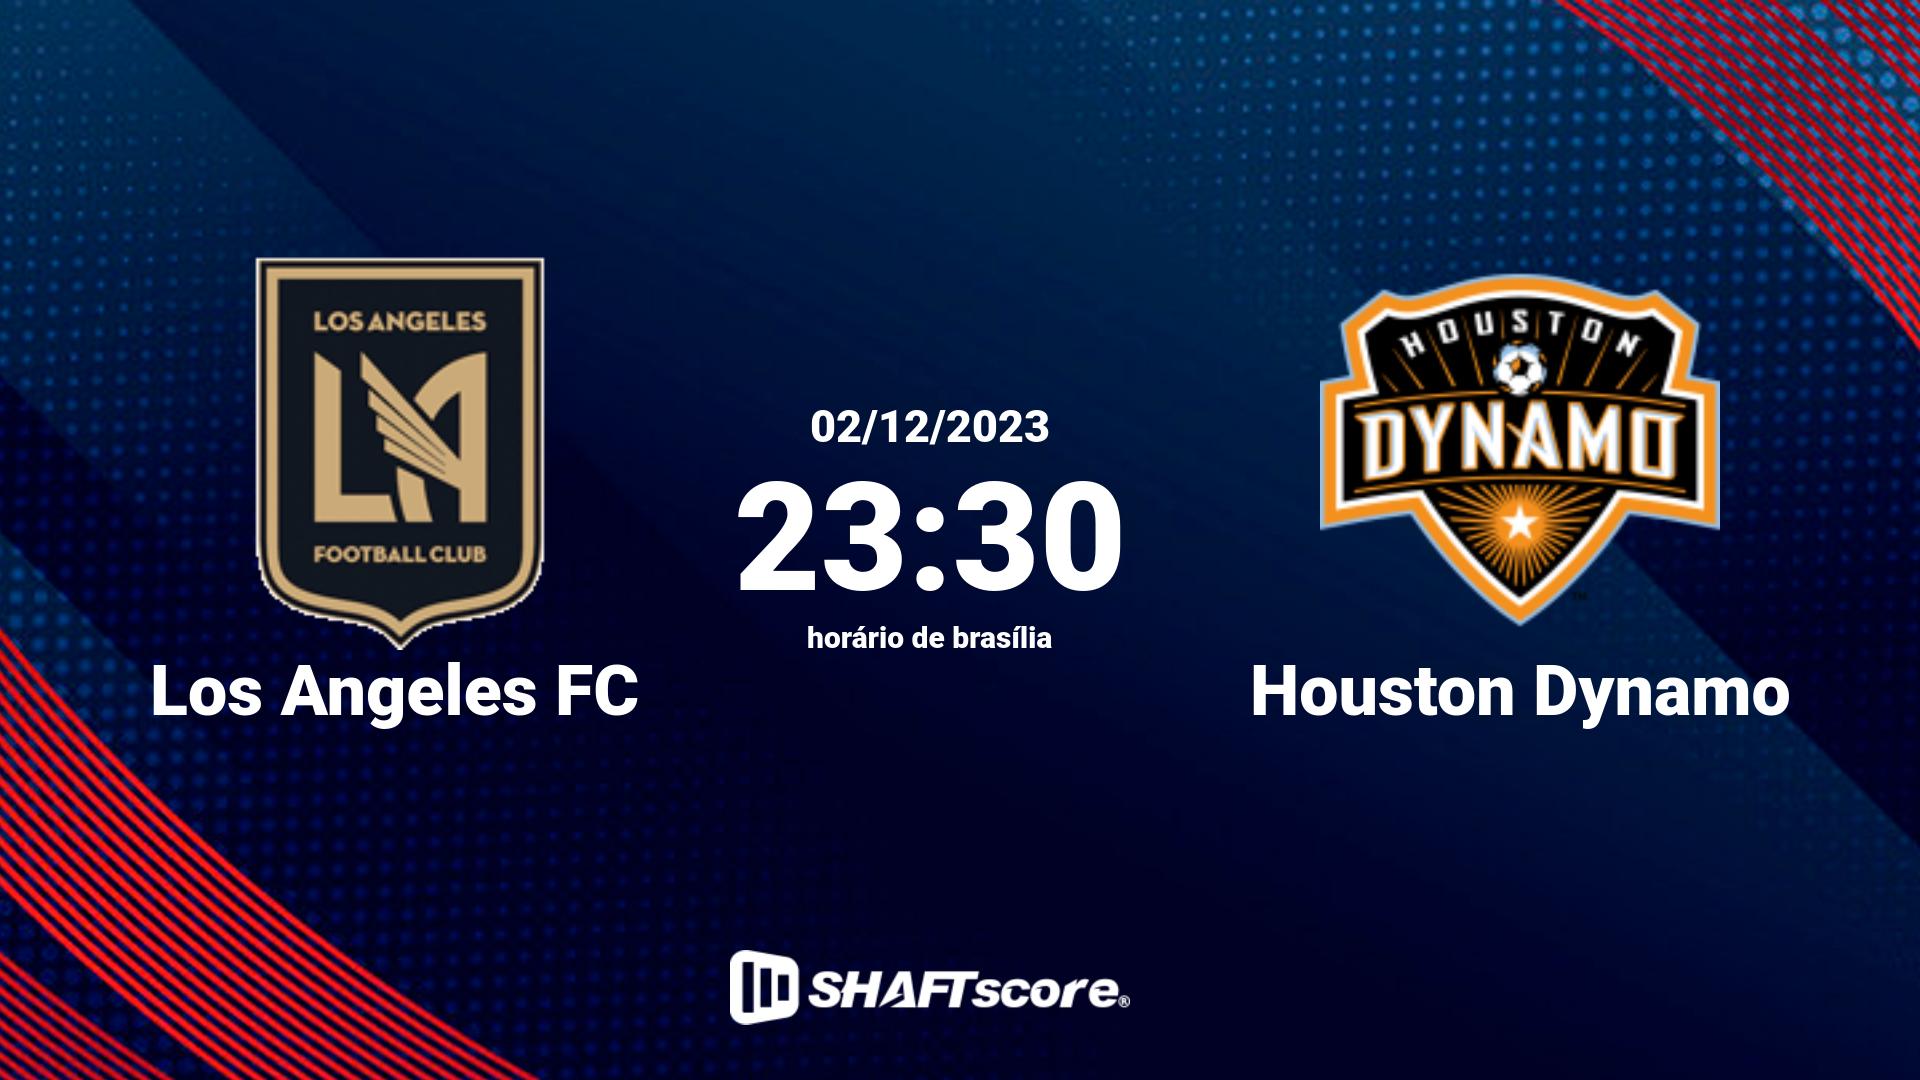 Estatísticas do jogo Los Angeles FC vs Houston Dynamo 02.12 23:30